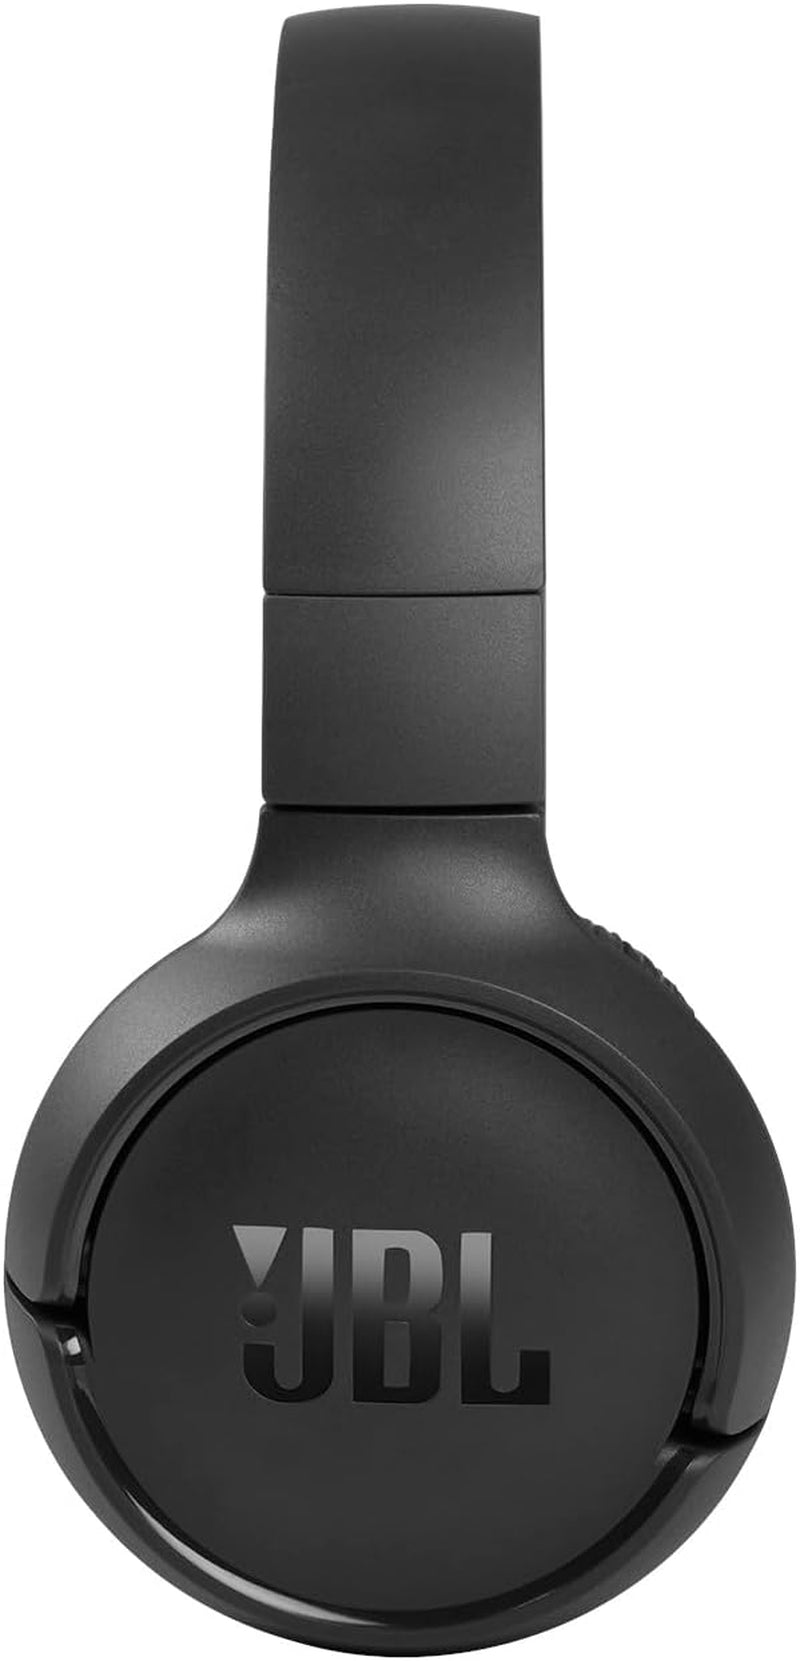 Tune 510BT: Wireless On-Ear Headphones with Purebass Sound - Black